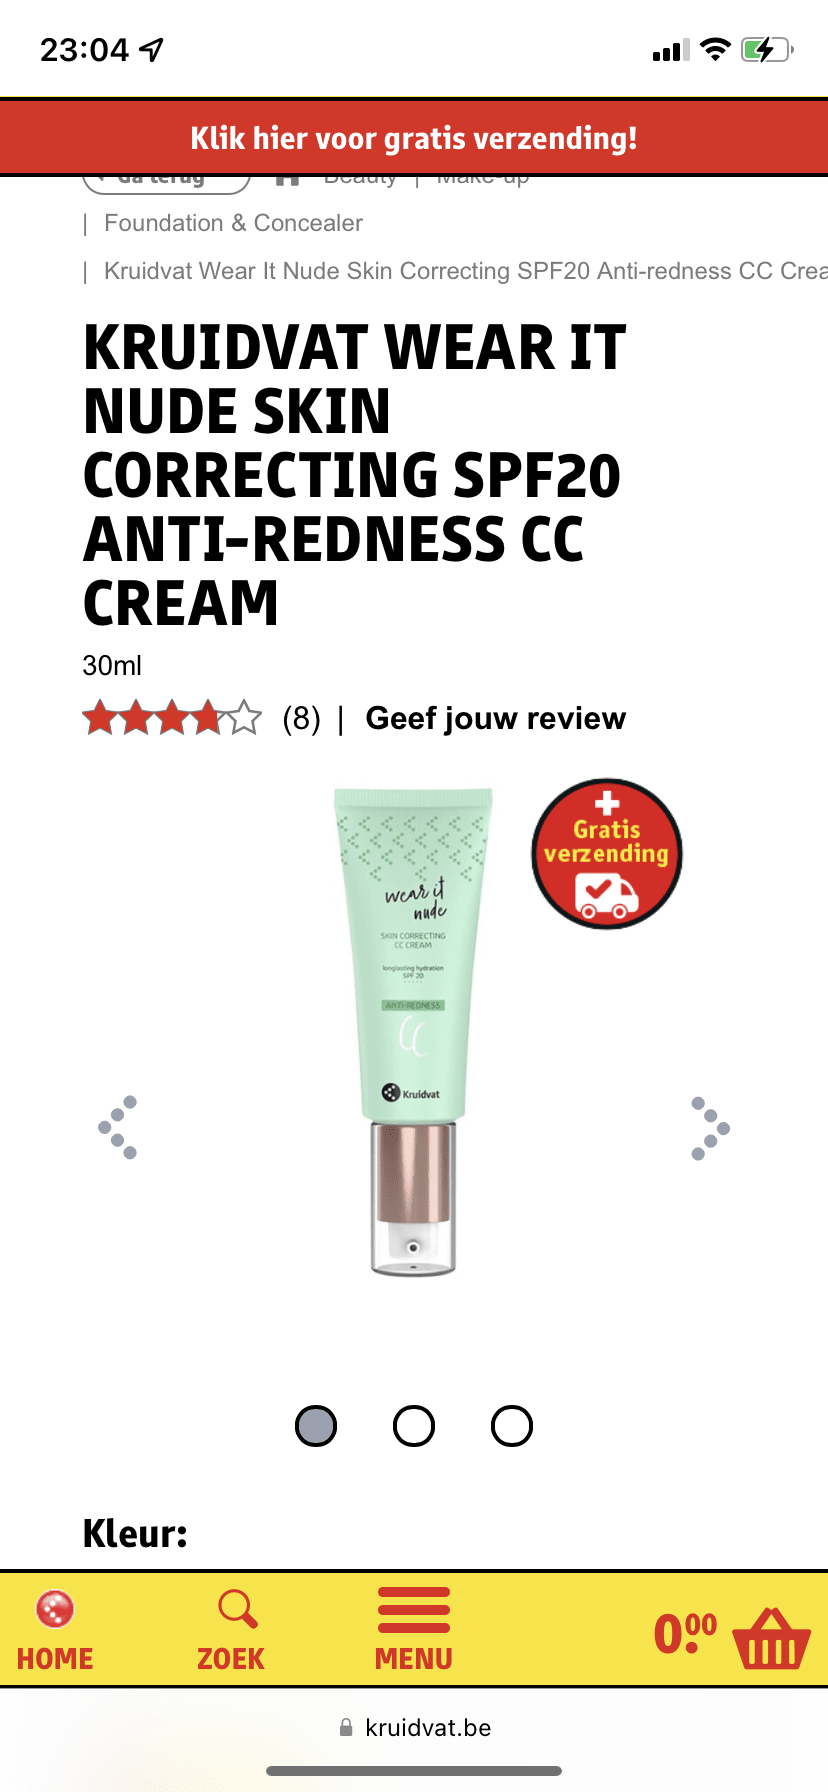 Wear It Nude Skin Correcting SPF20 Anti-dullness CC Cream - review image